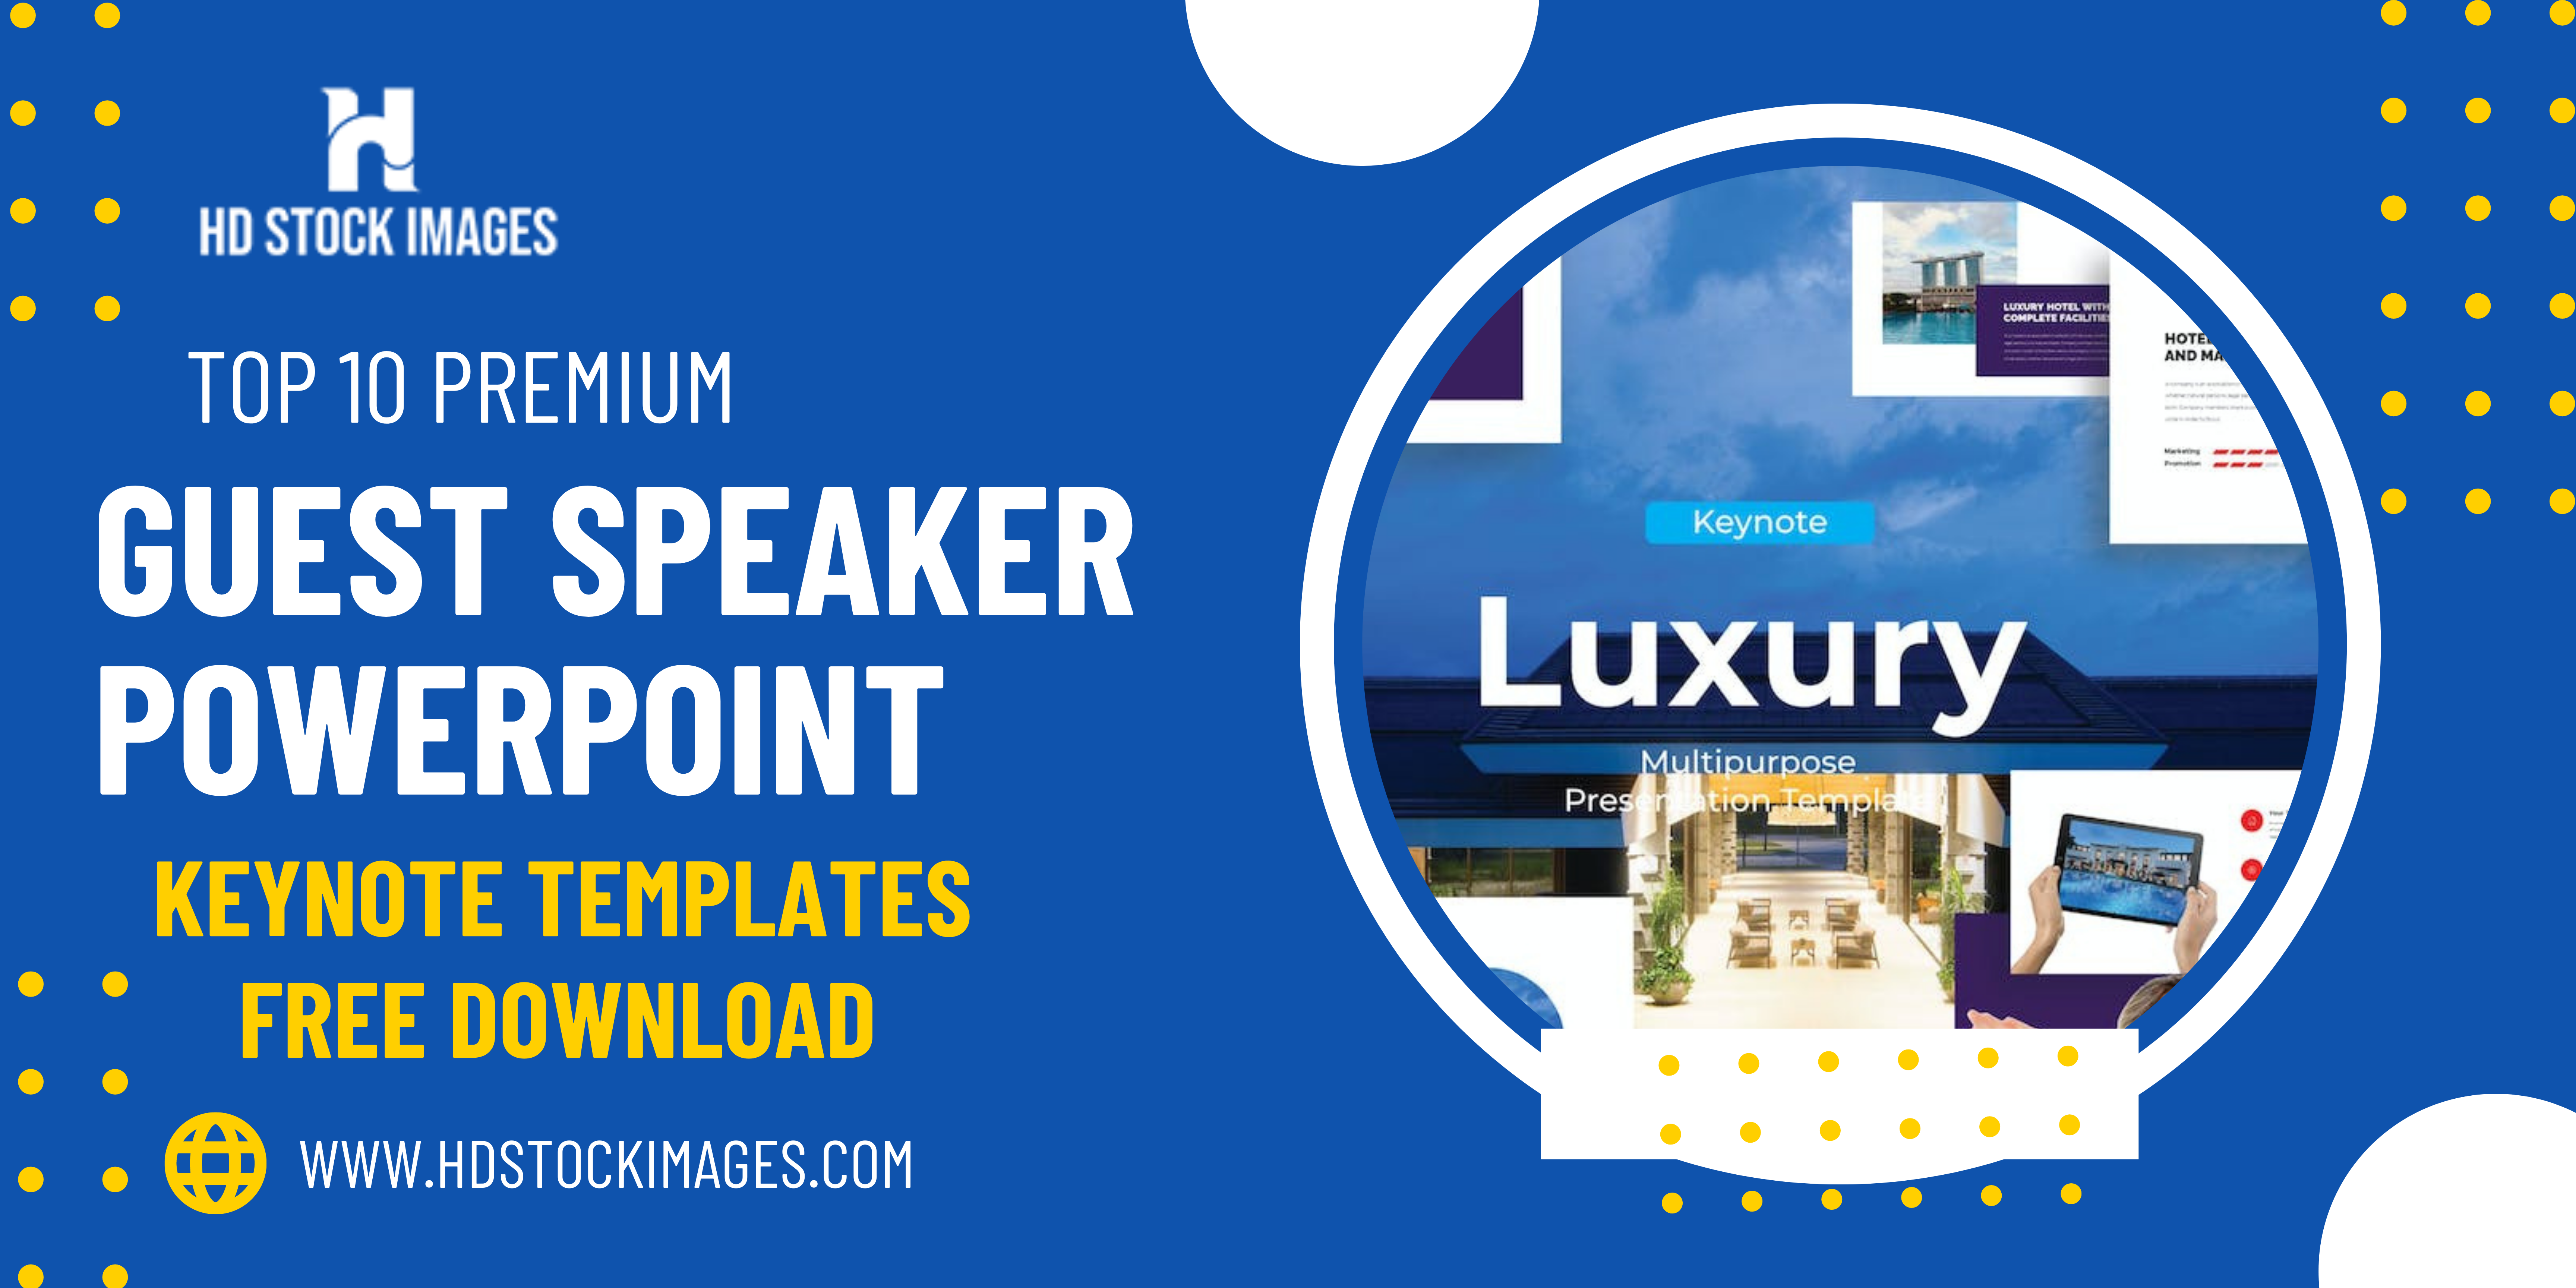 Top 10 Premium Guest Speaker PowerPoint Keynote Templates Free Download